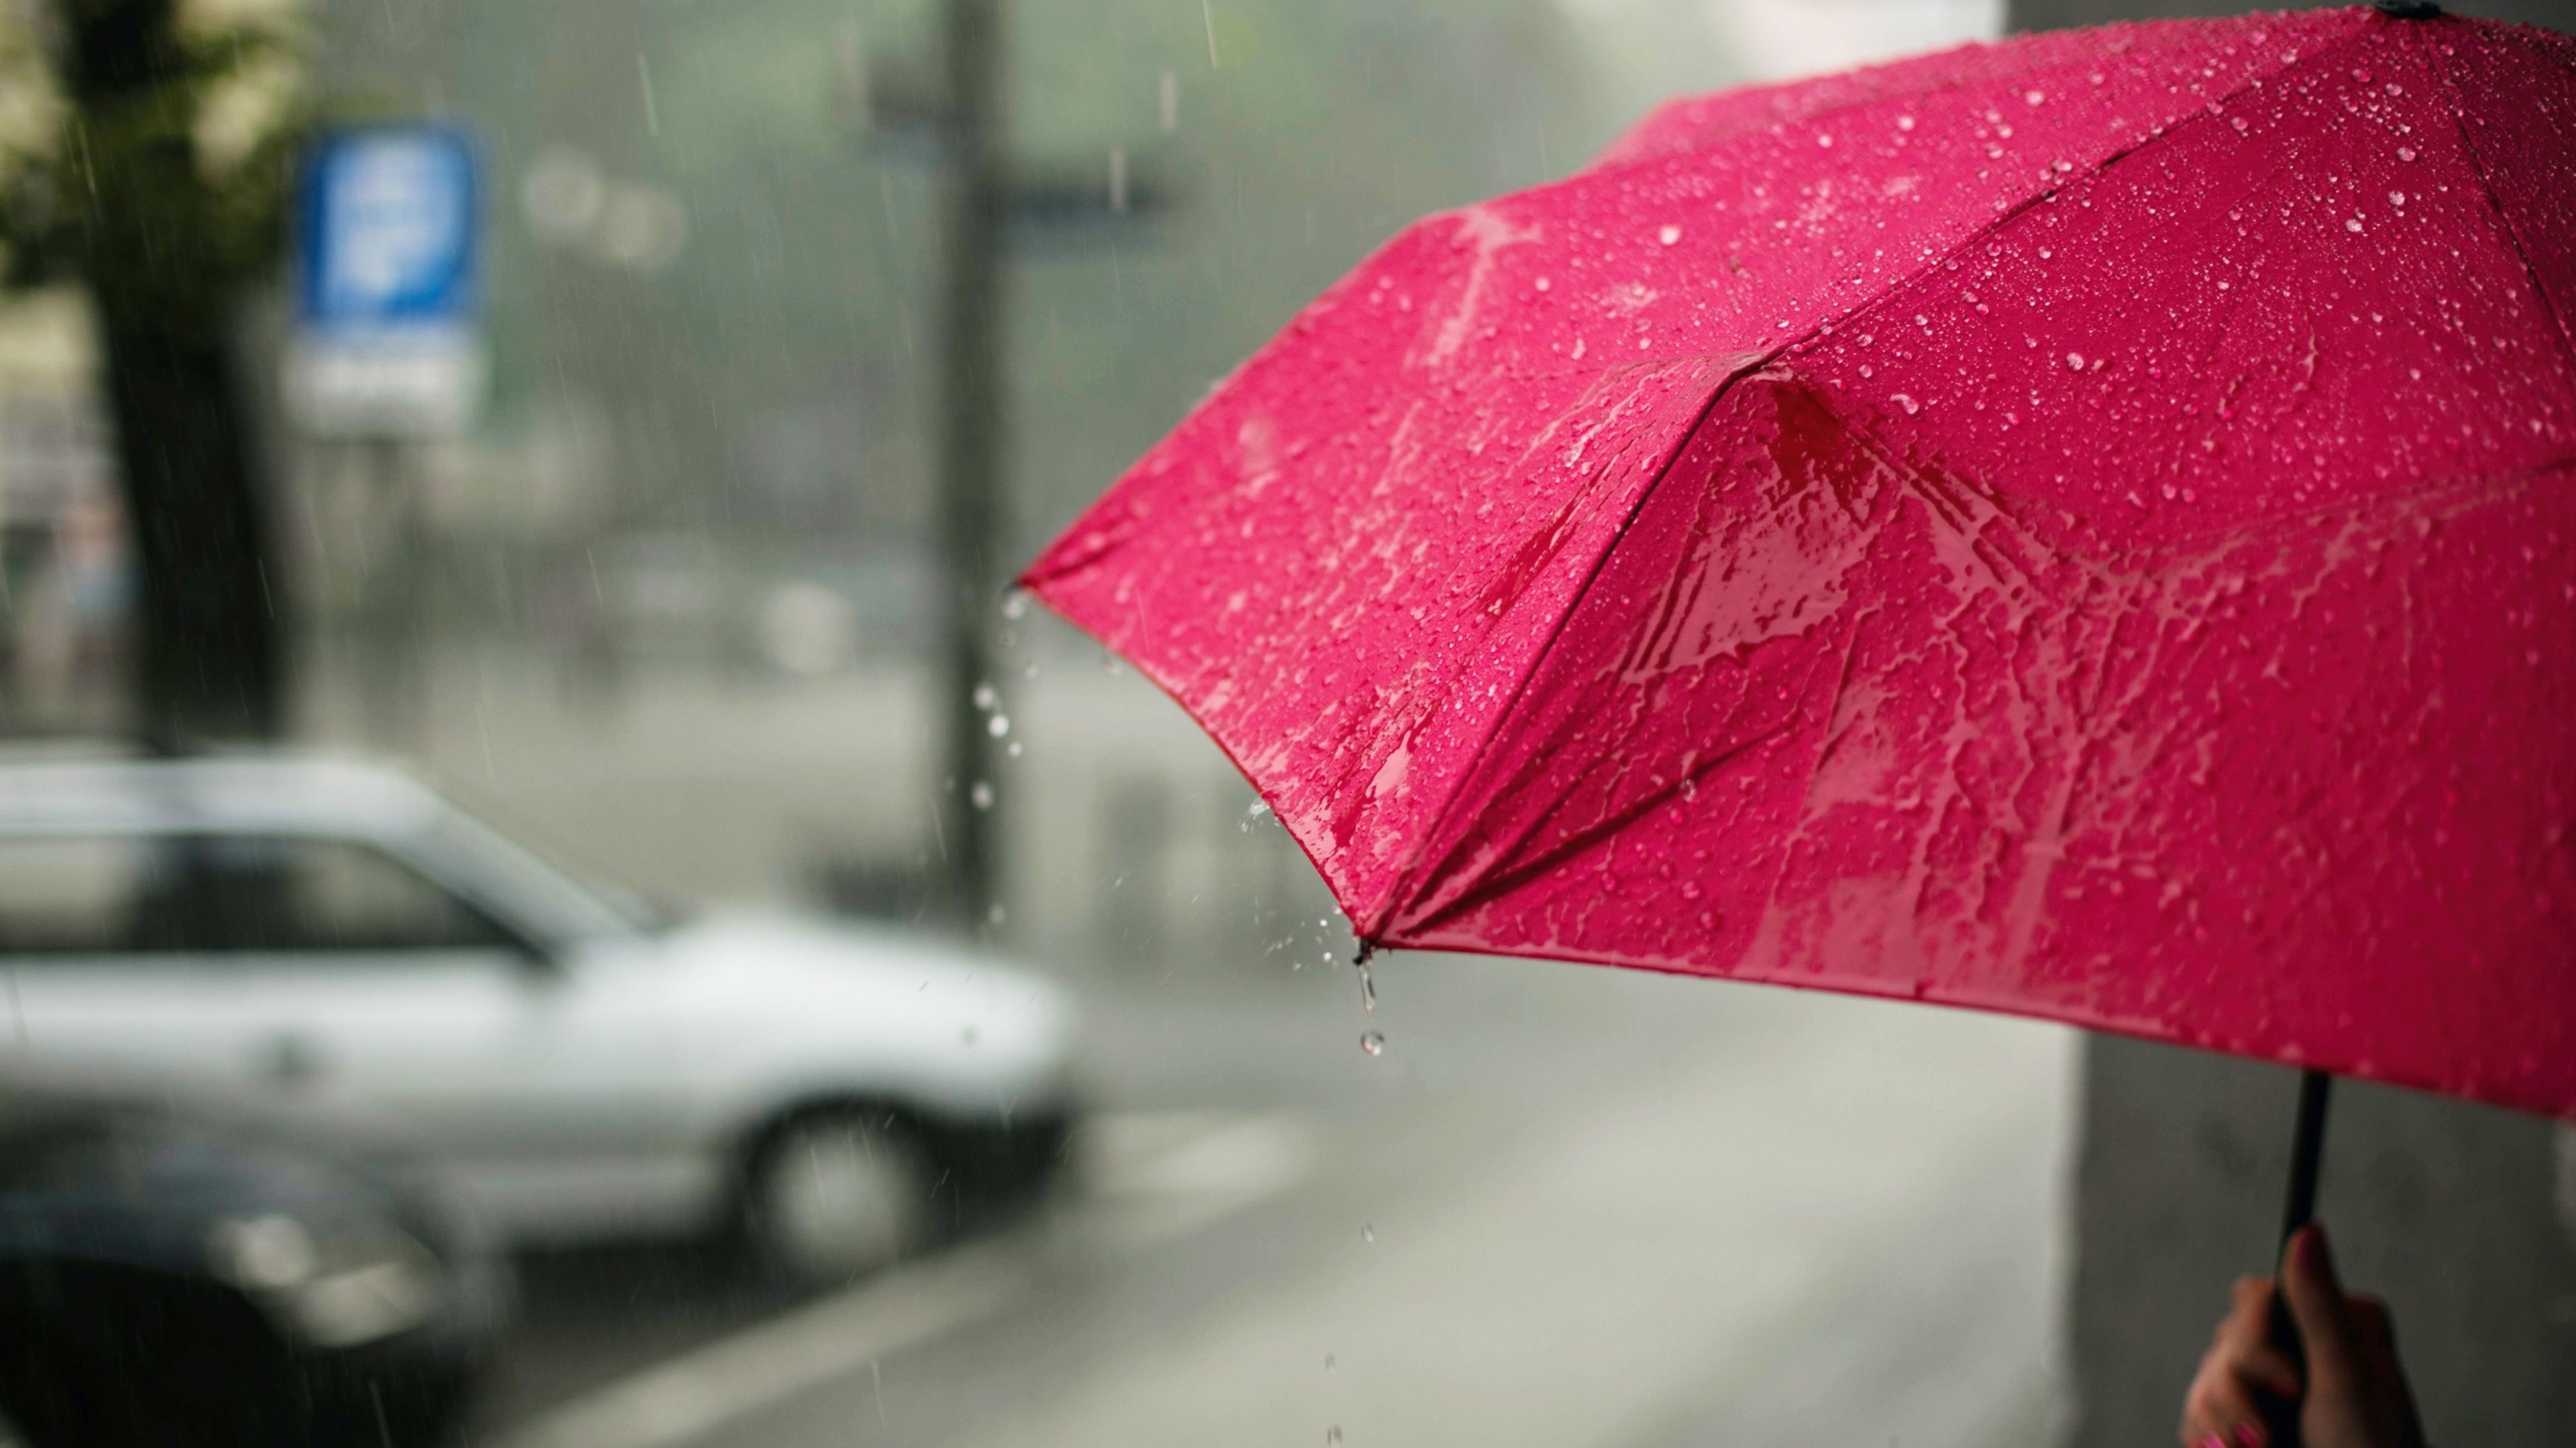 Paraguas rosa